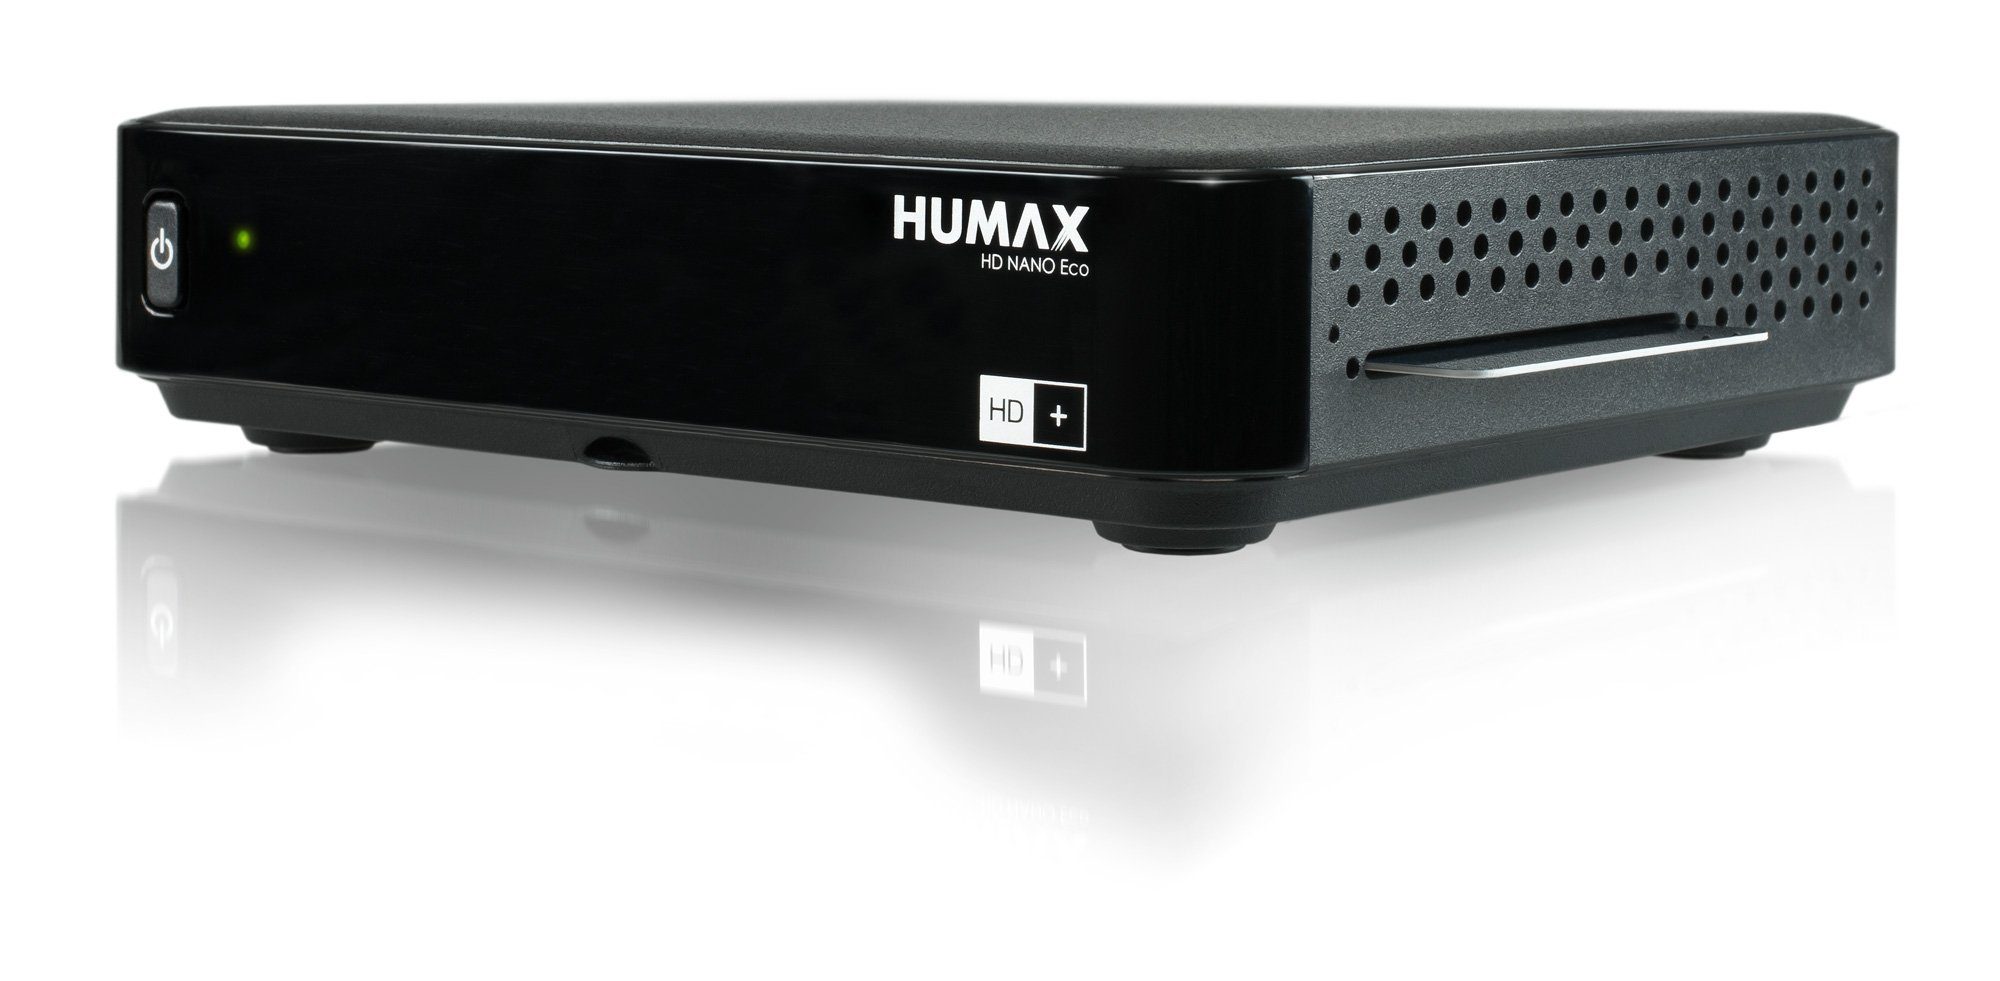 Kabel (HD+, Nano 1 Eco HDMI-Kabel) TB PVR, + SAT-Receiver Humax Tags, Festplatte